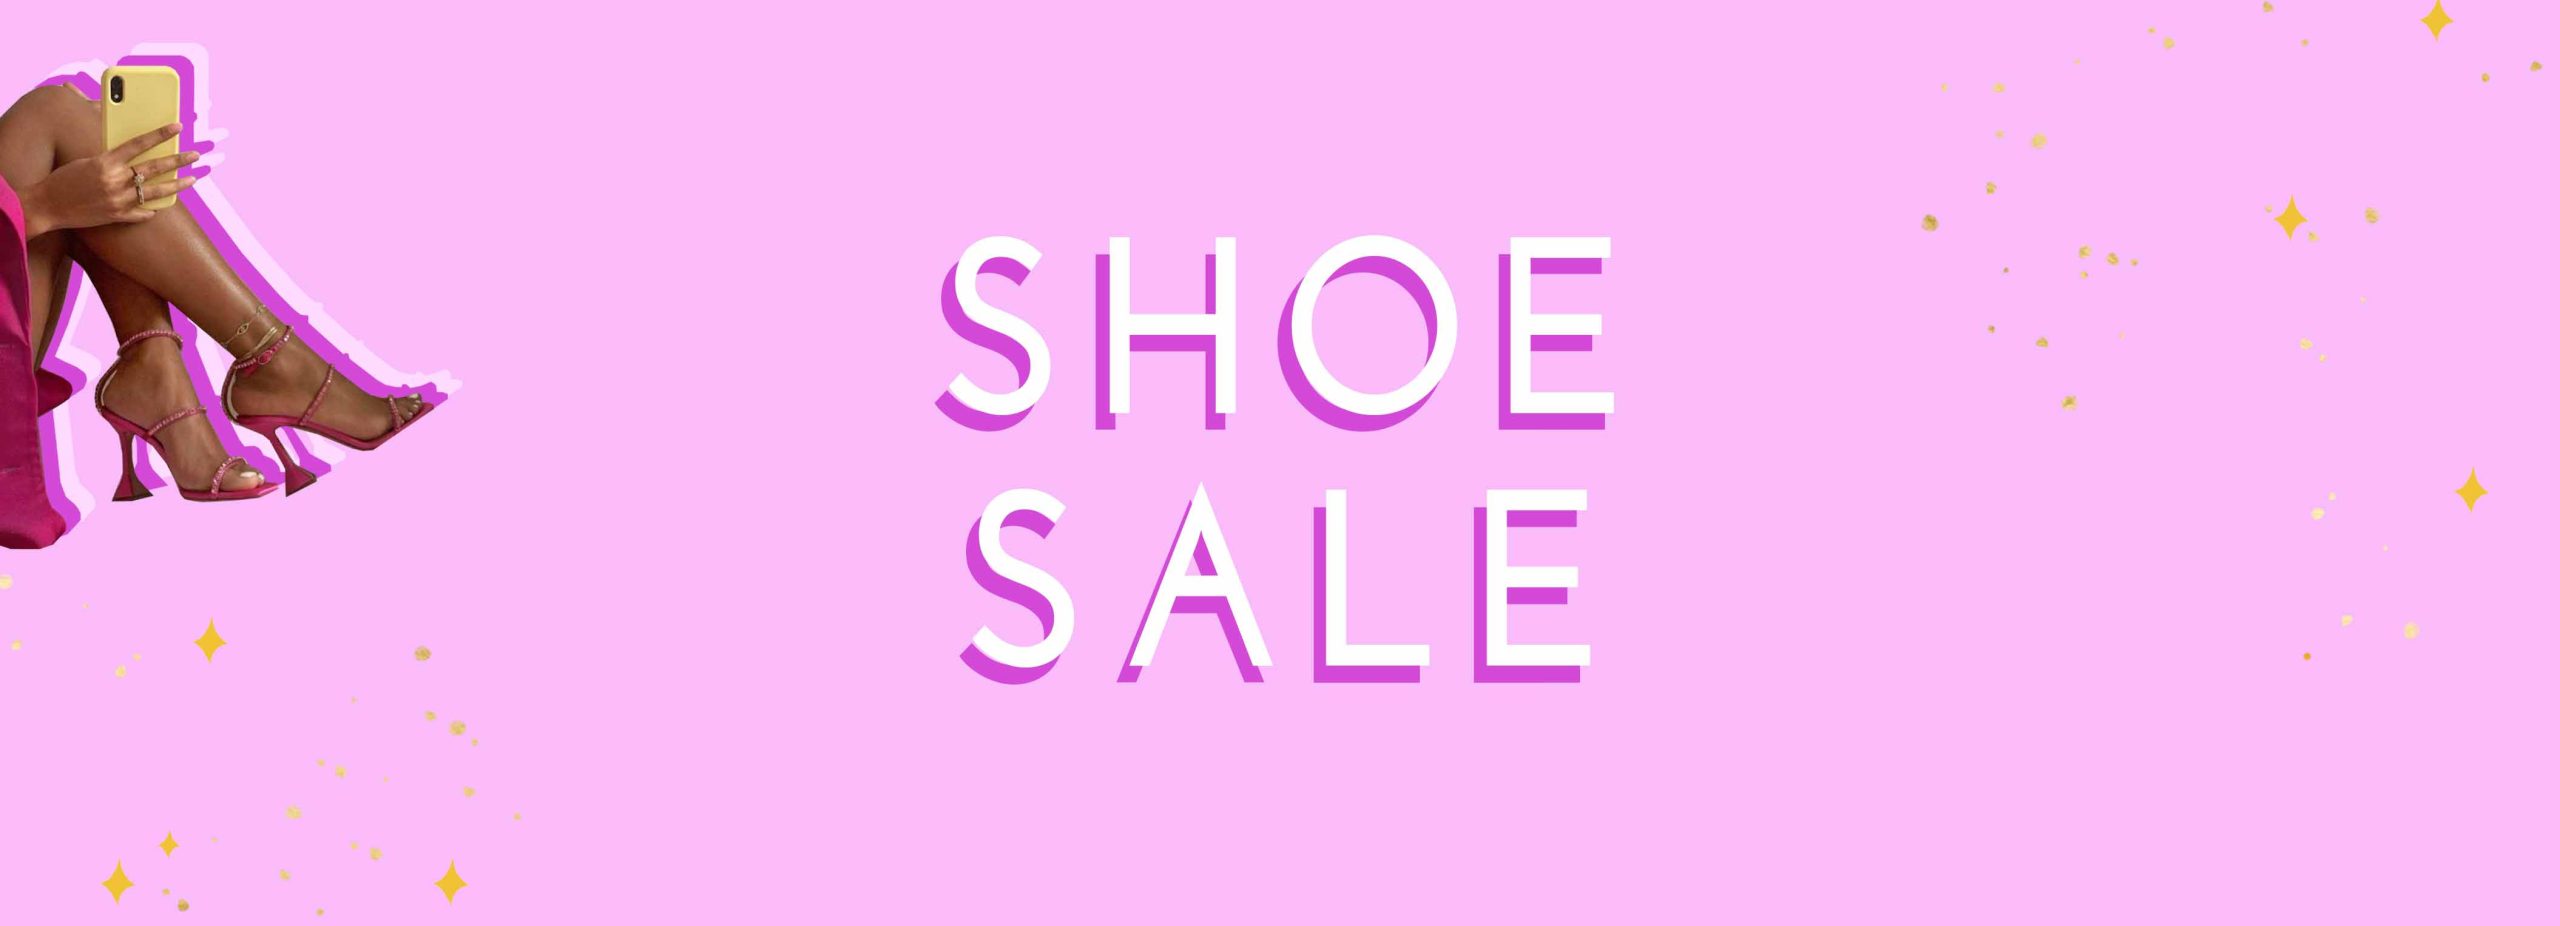 Shoe sale